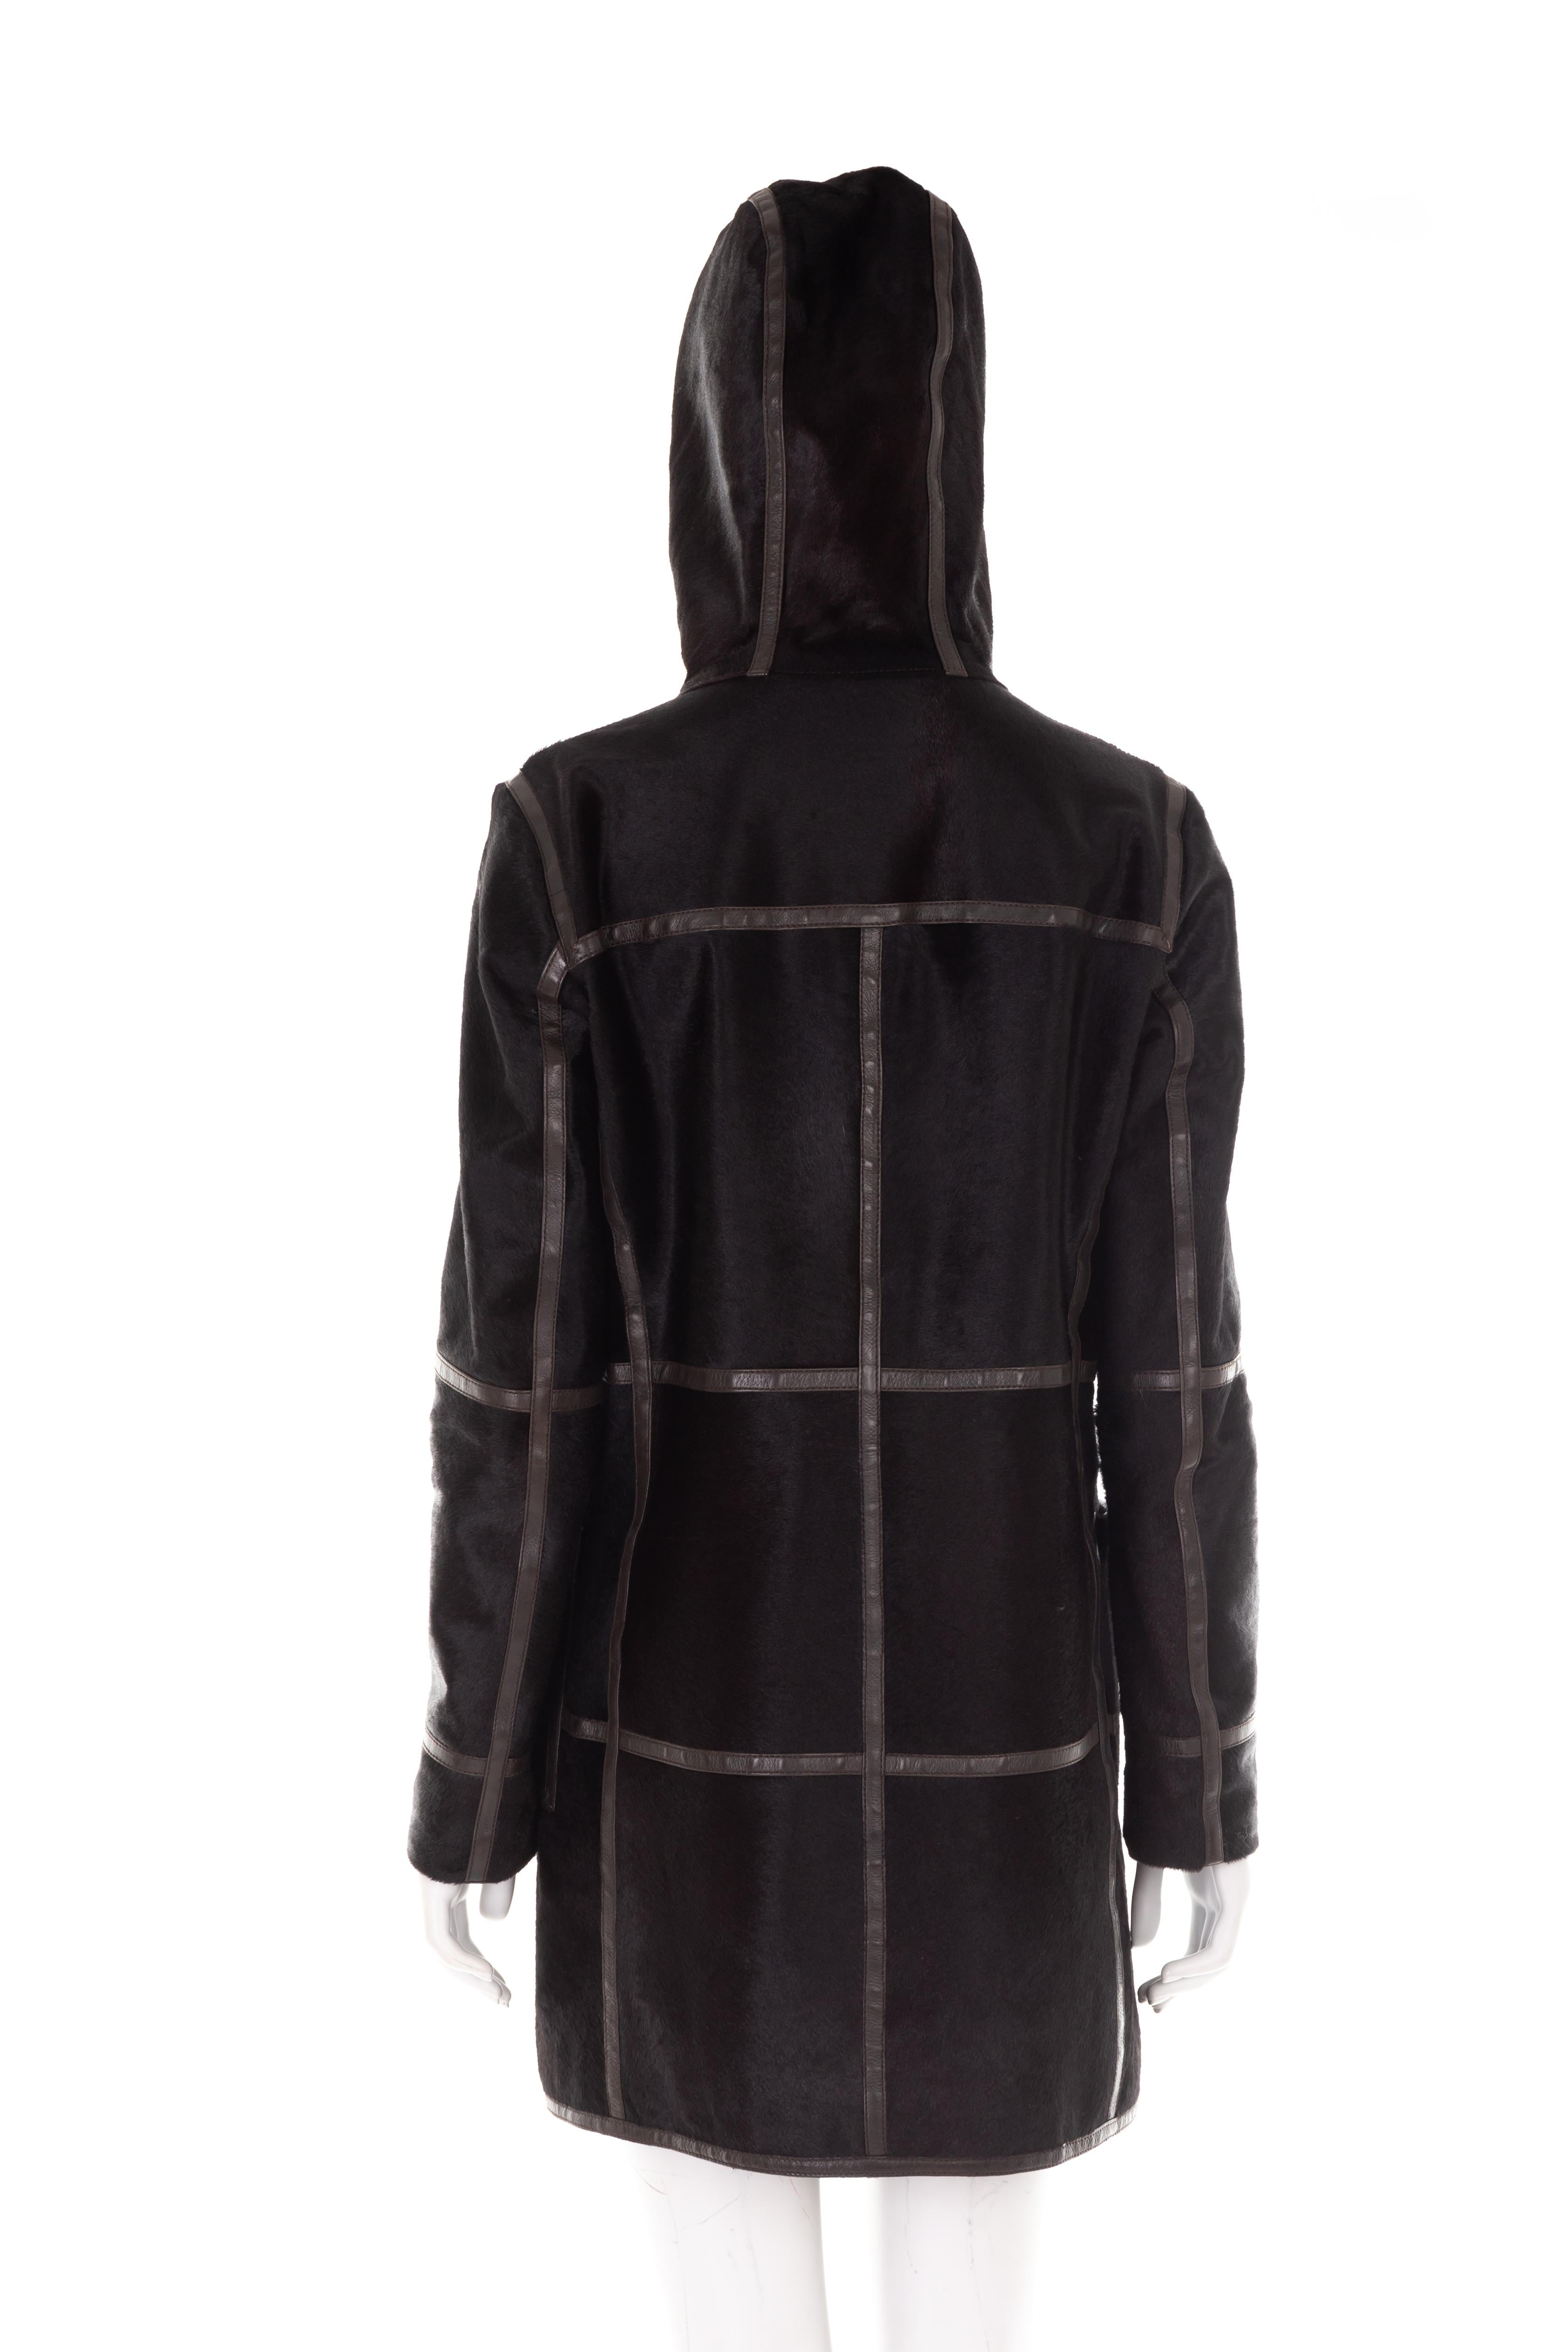 Prada by Miuccia Prada F/W 2005 black calfskin hooded coat  For Sale 1